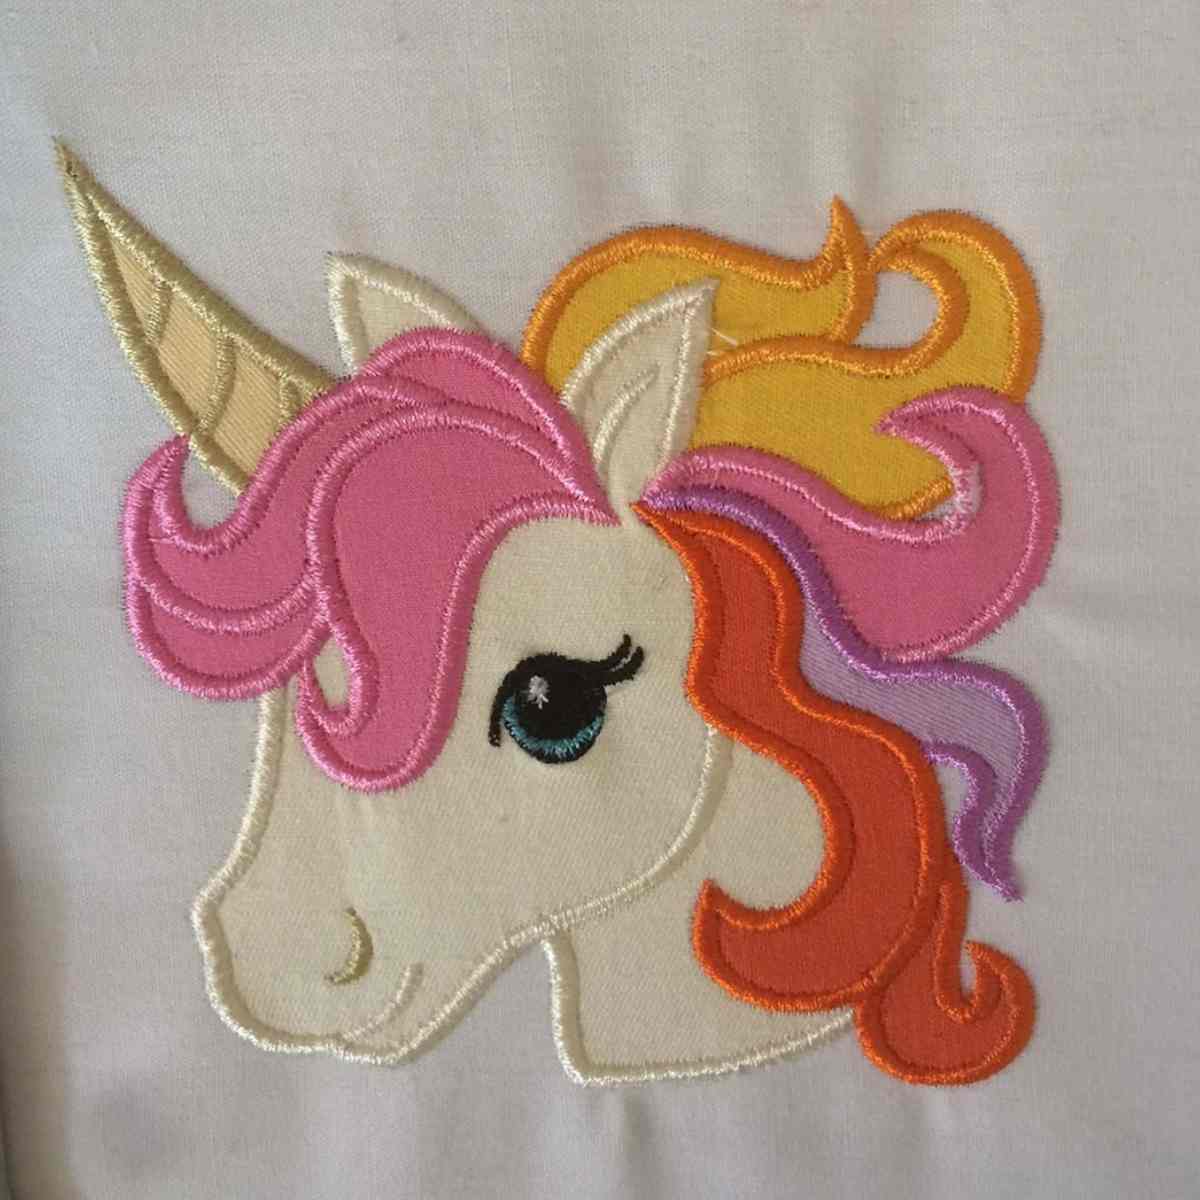 Unicorn Embroidery